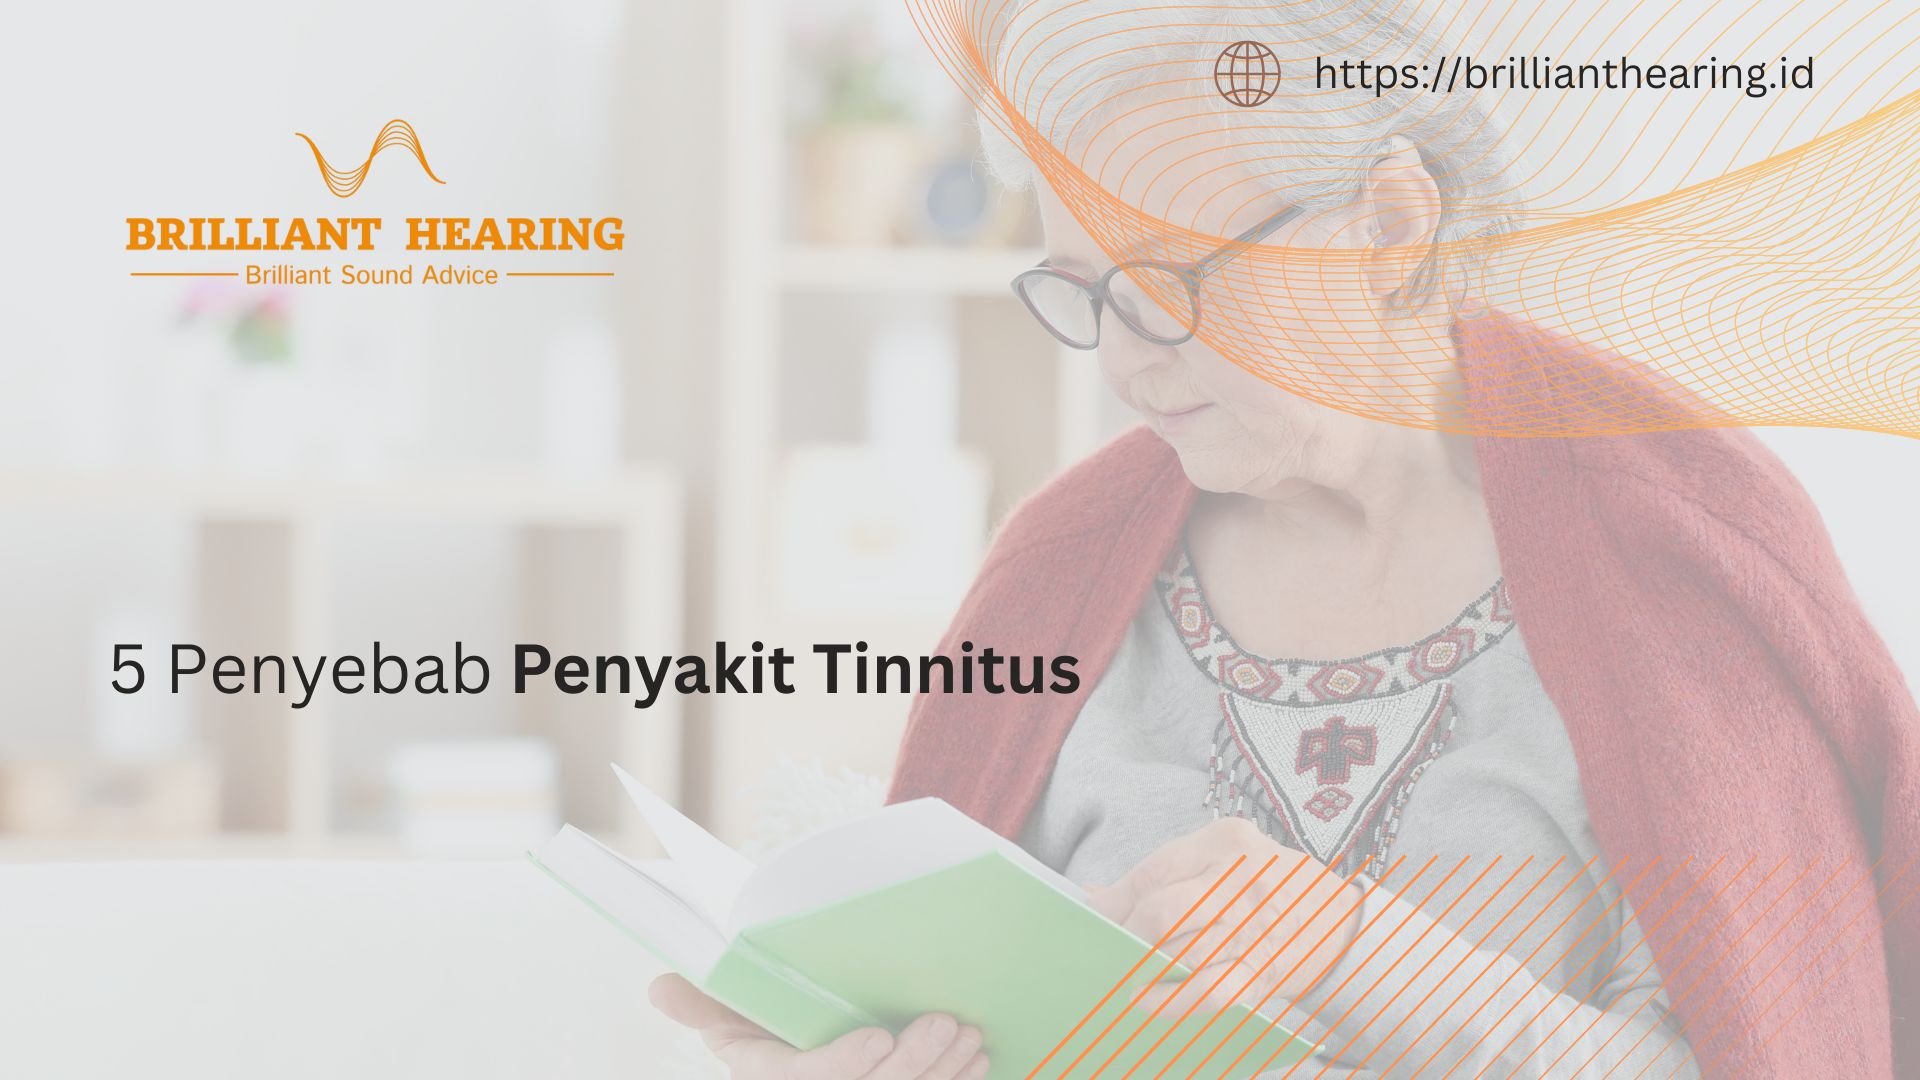 Penyebab Penyakit Tinnitus